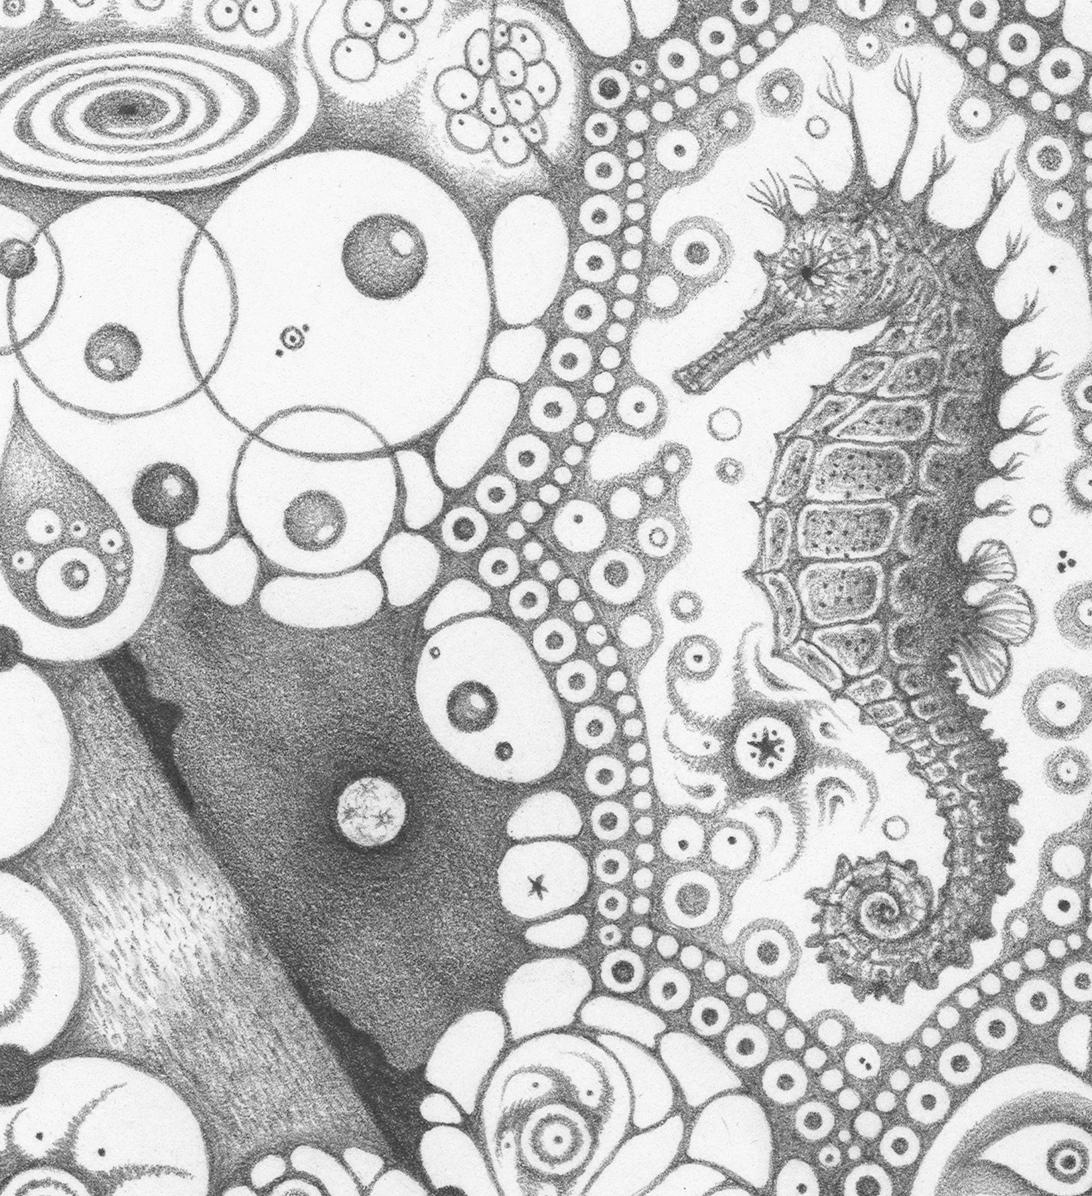 Snowflakes 126 Mermaid Dream, Mandala Pencil Drawing on Paper with Seahorse - Contemporary Art by Michiyo Ihara